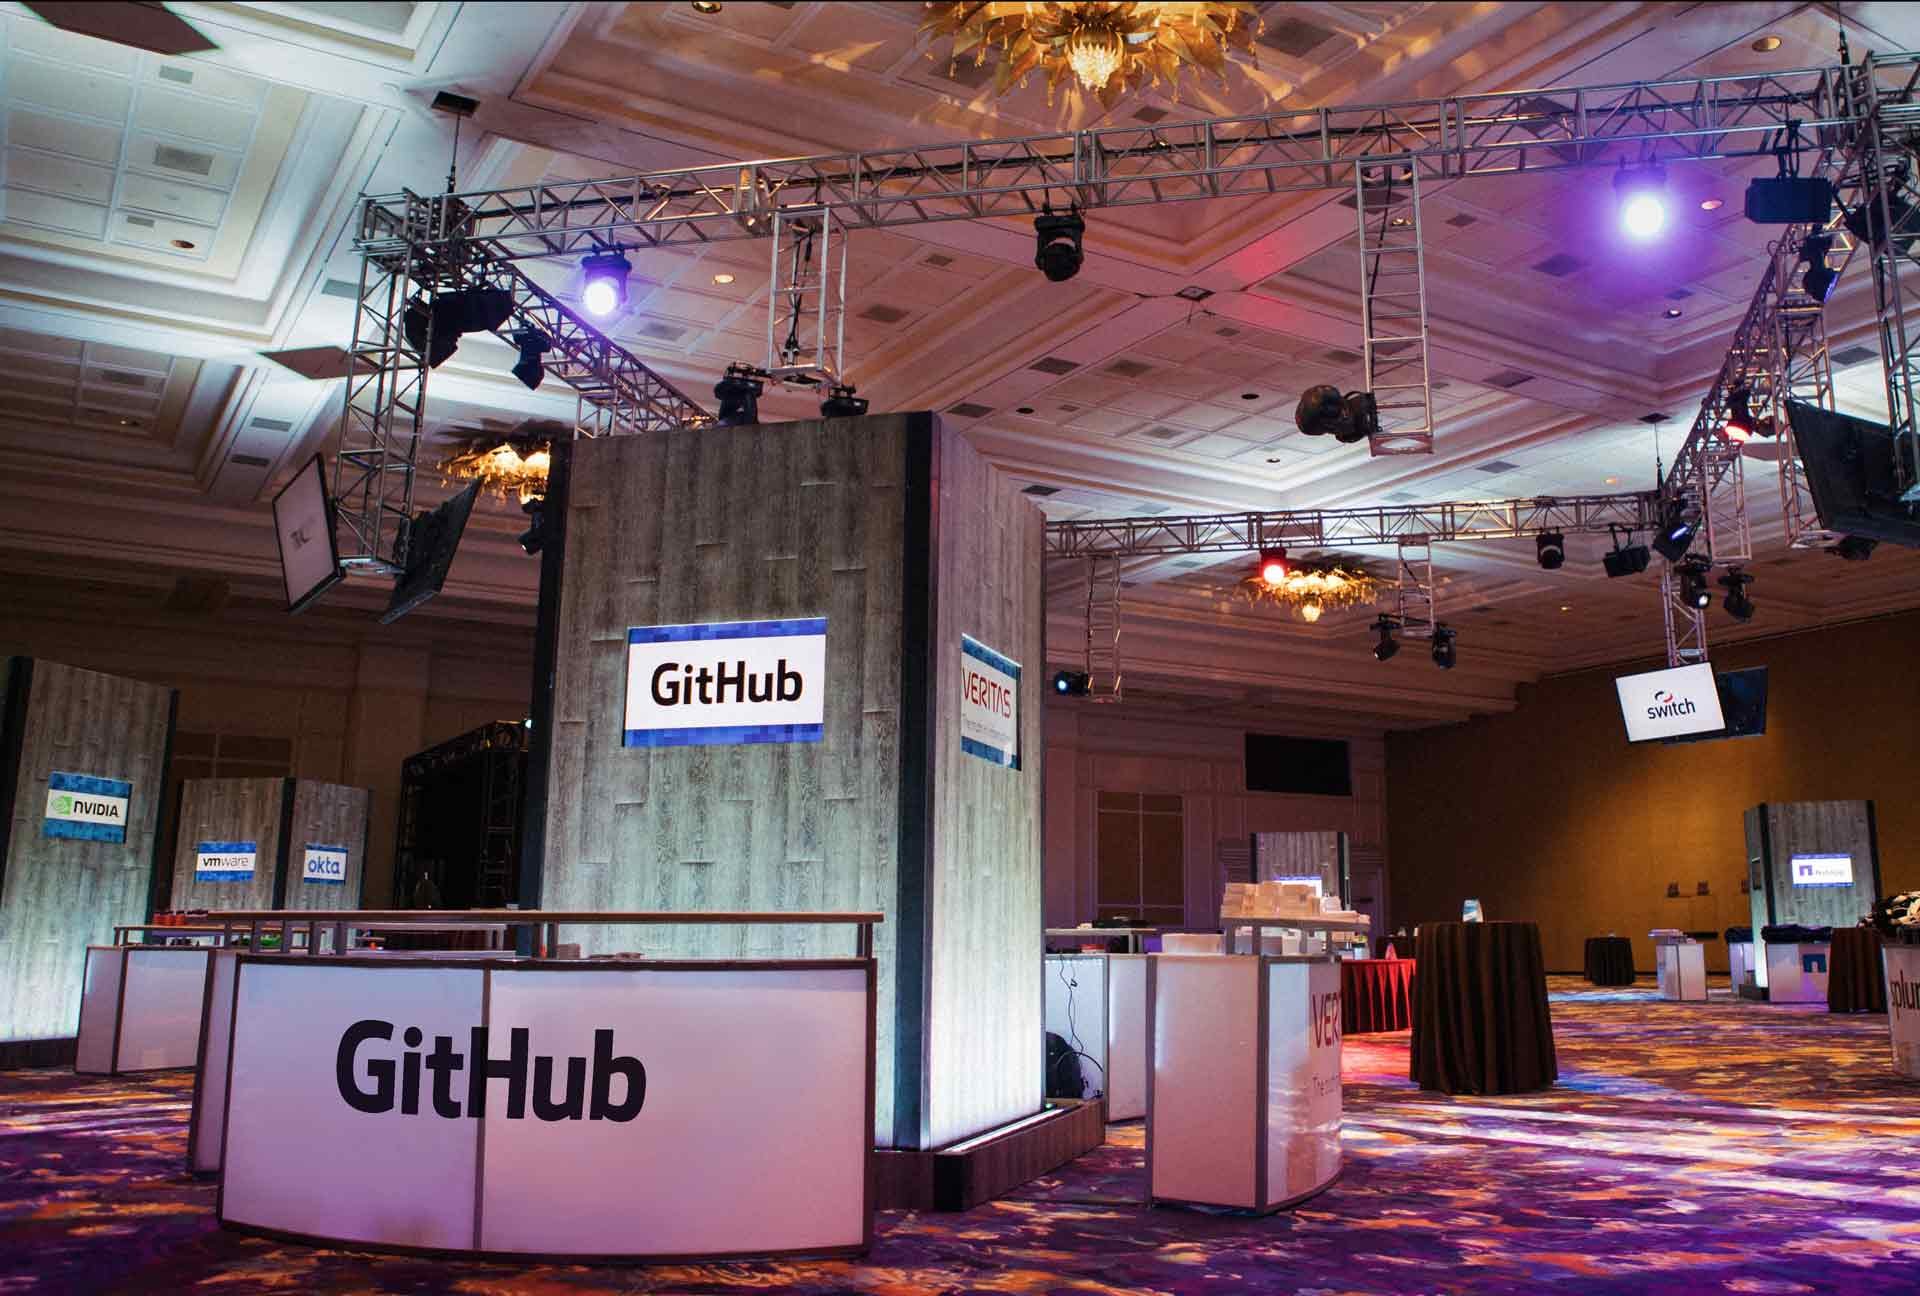 Exhibit-Booth-GitHub-Conference-Exhibitor.jpg